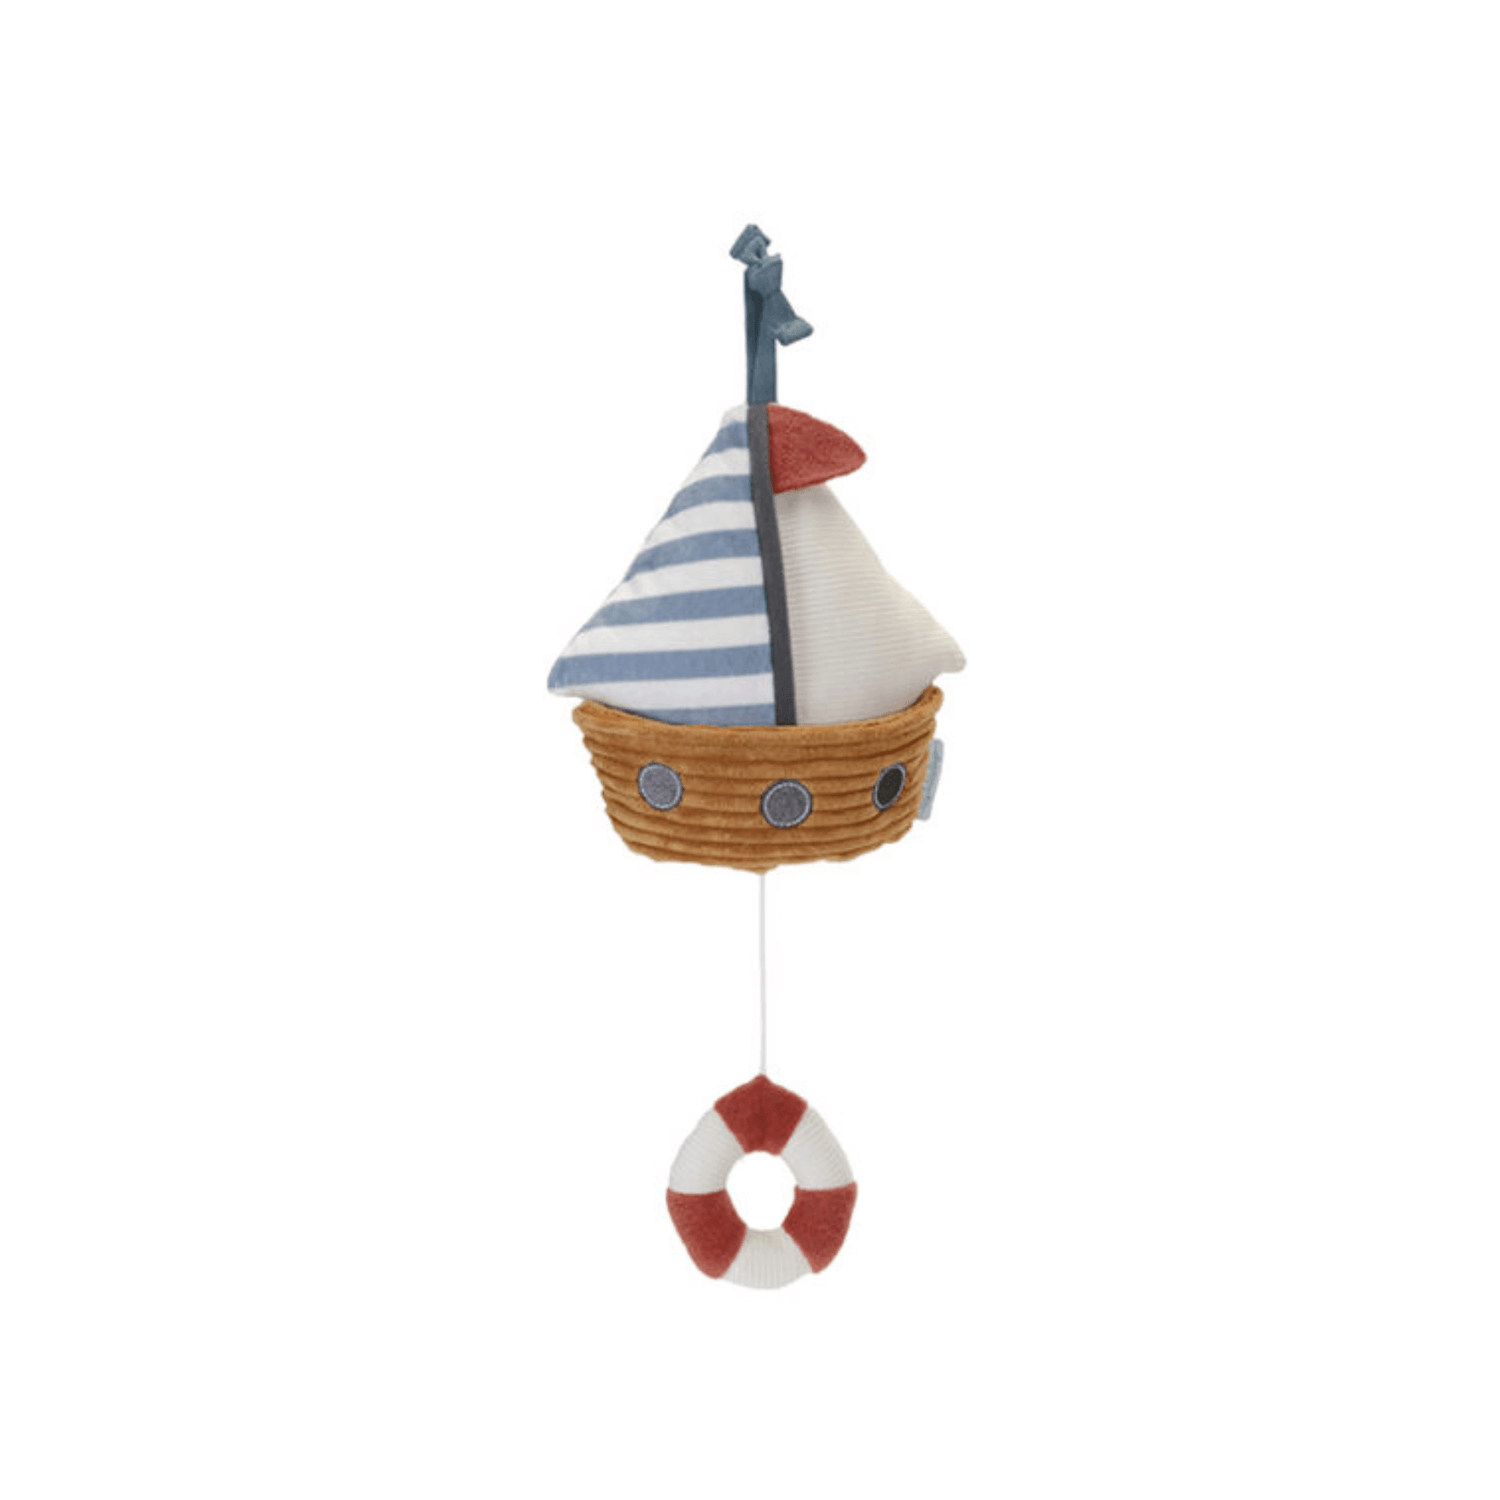 Musical toy - Sailors Bay 